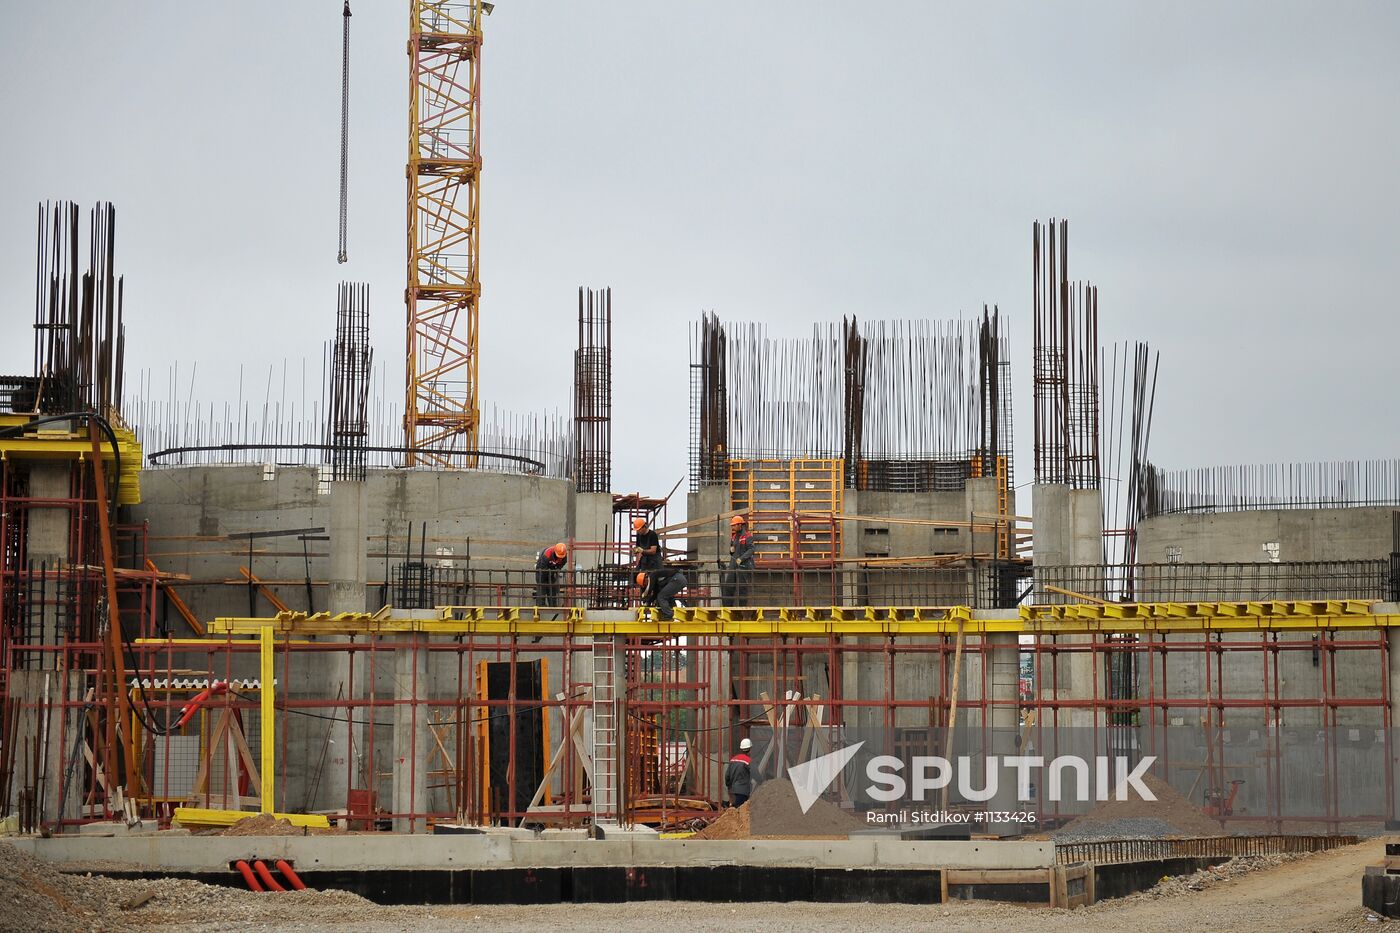 Construction of Spartak stadium